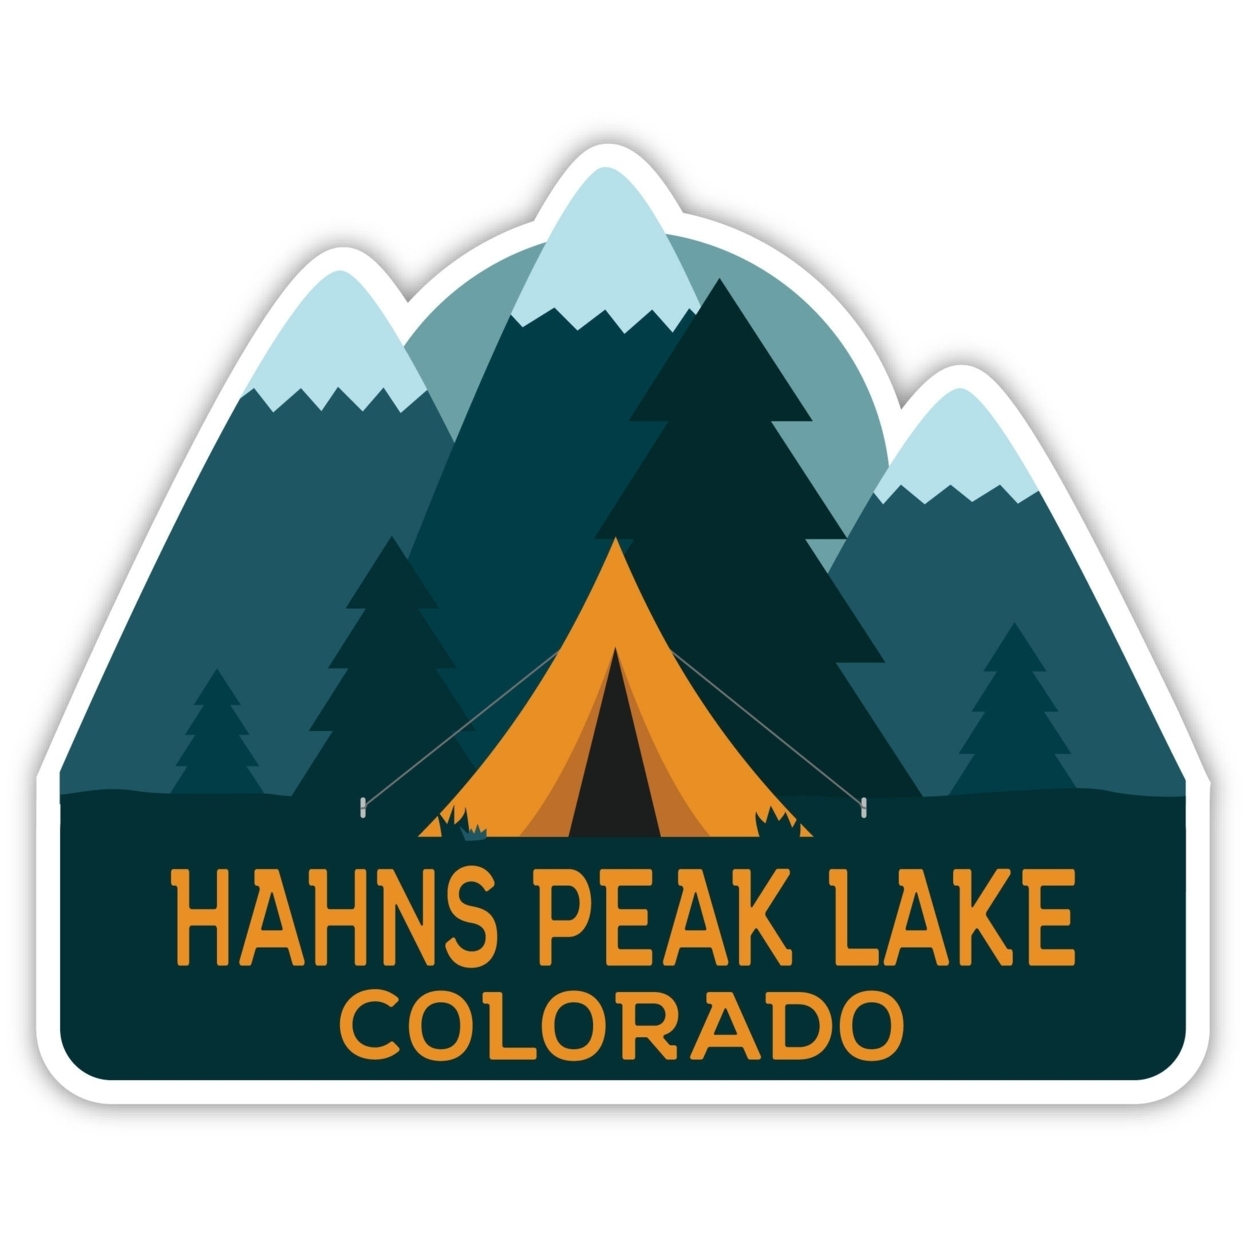 Hahns Peak Lake Colorado Souvenir Decorative Stickers (Choose Theme And Size) - Single Unit, 2-Inch, Tent